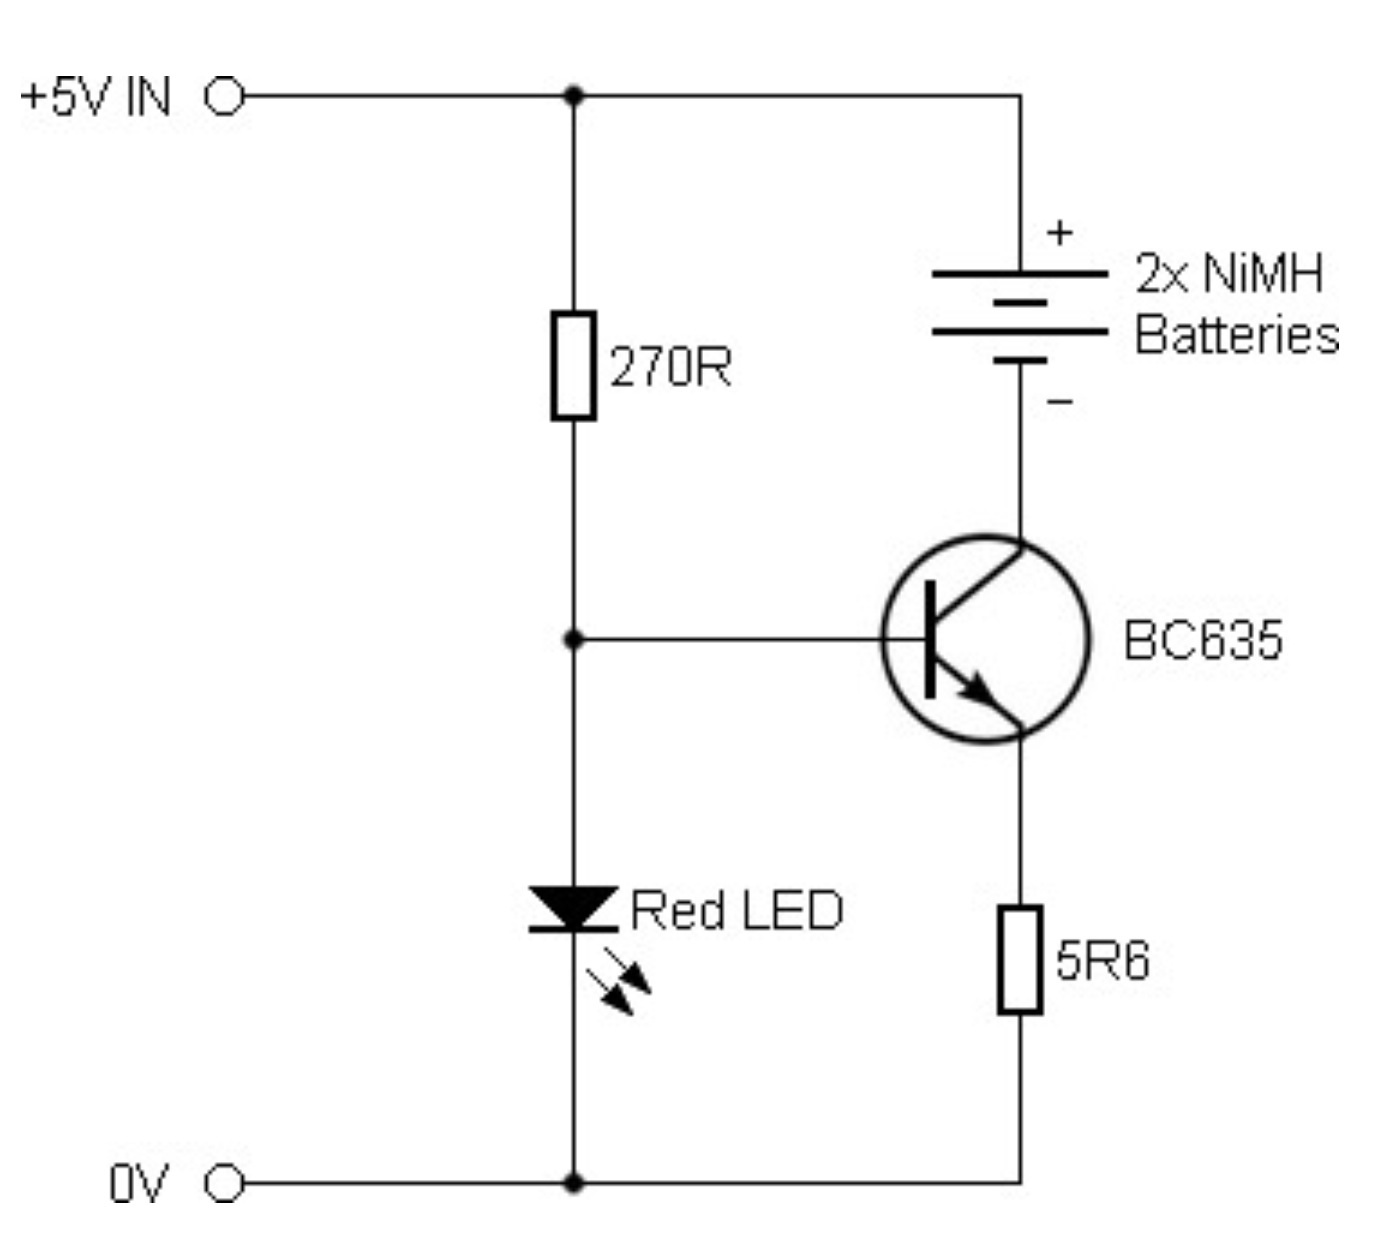 2 AA ni-mh charger circuit | Forum for Electronics